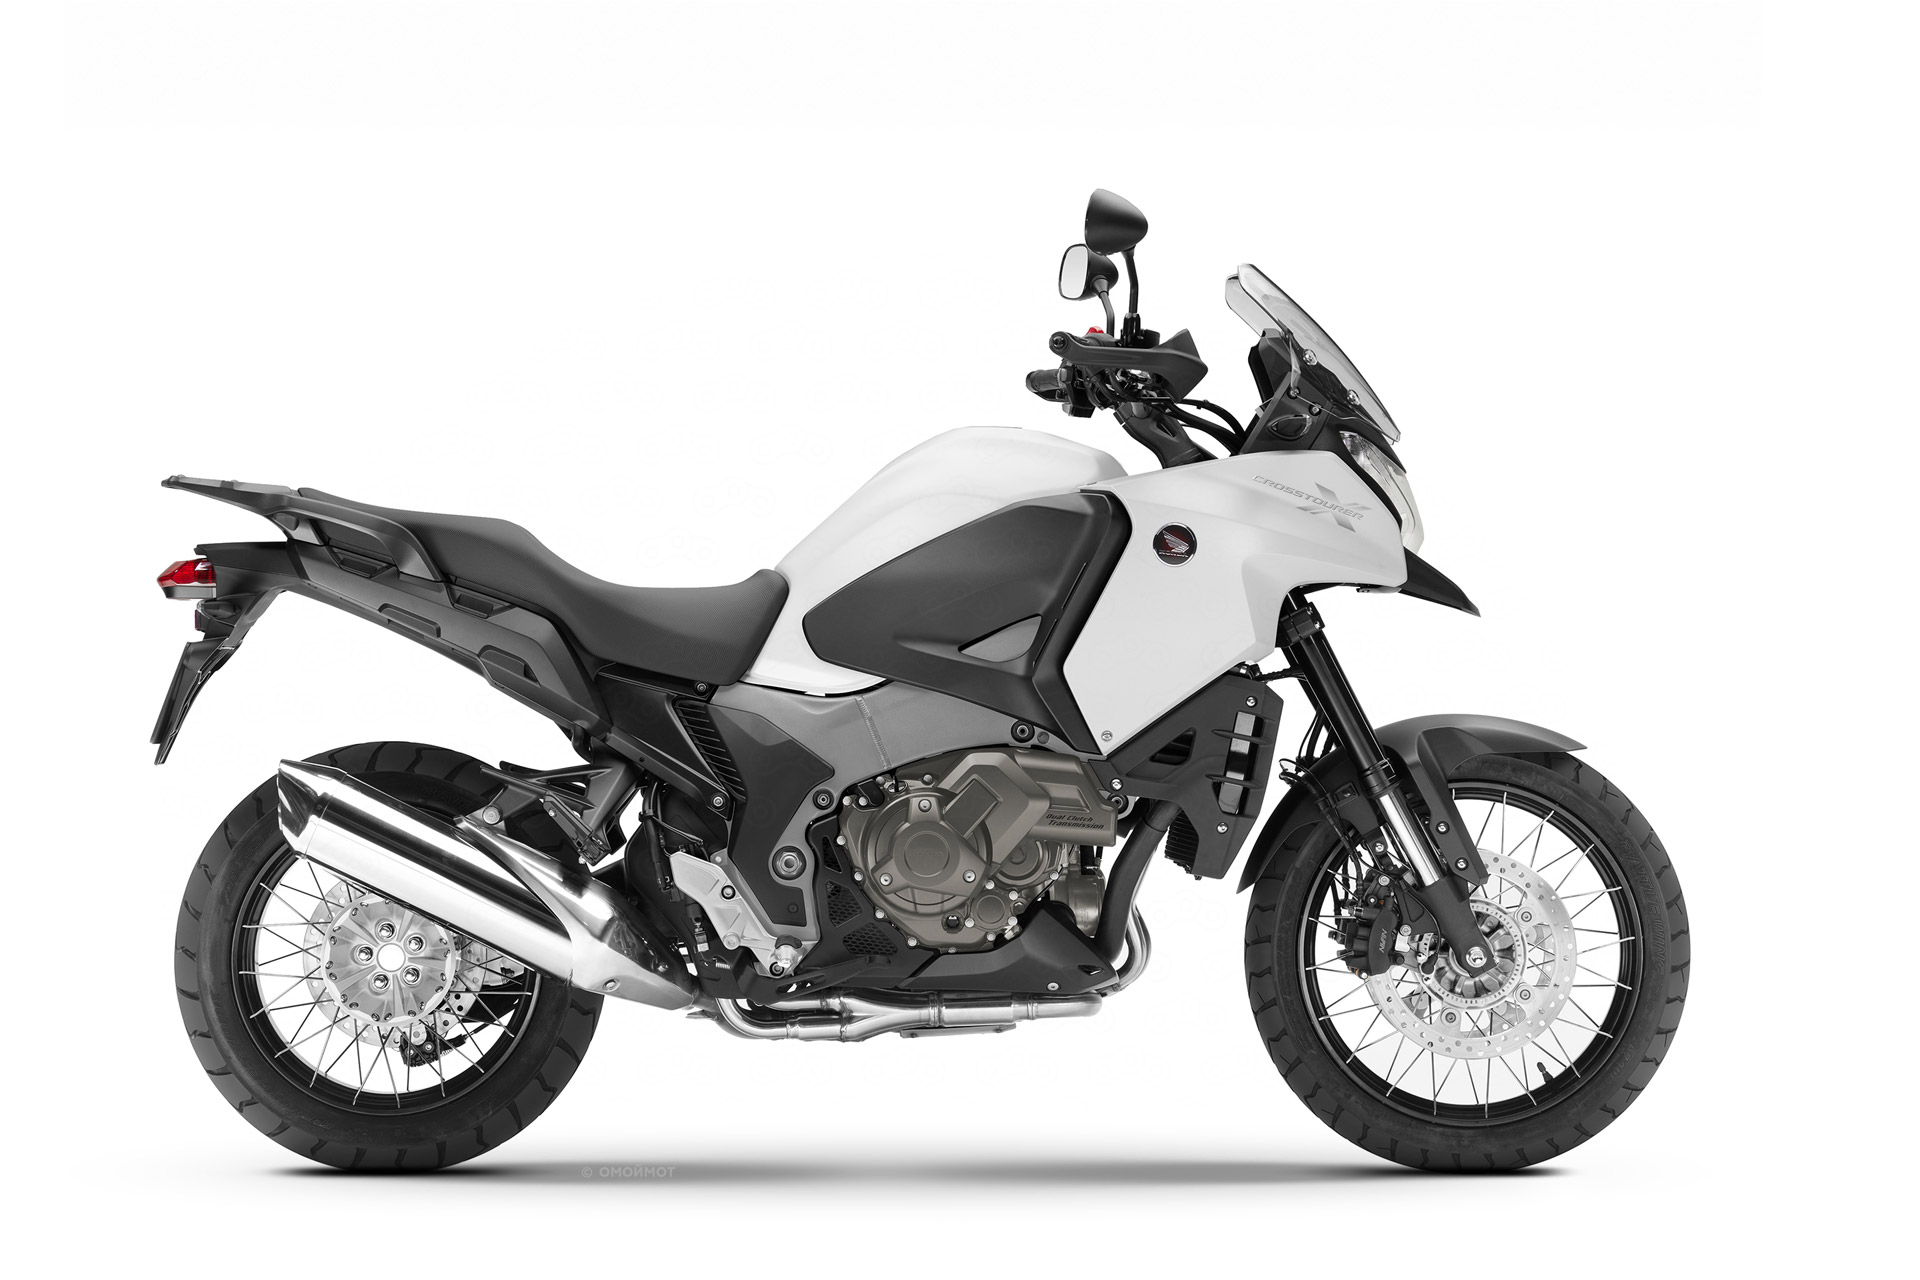 Мотоцикл Honda VFR1200X Crosstourer цена, фото и характеристики